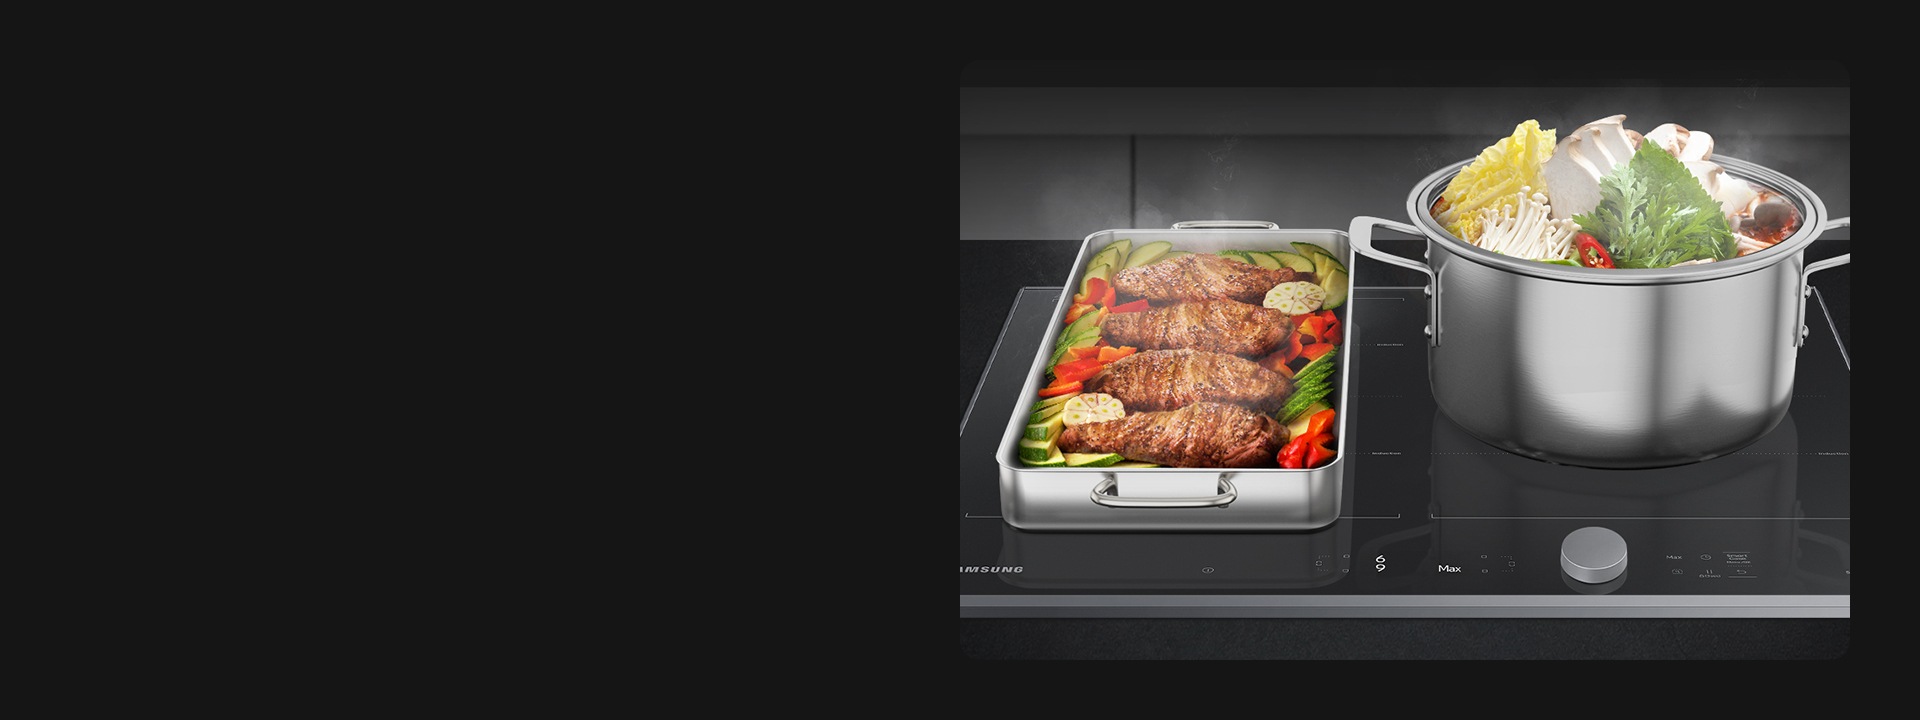 BESPOKE 인덕션 infitnie line 제품 위에 닭요리와 냄비 속 국요리가 끓고 있는 이미지입니다. 전체 화구 이용 시 최대 7,400 W 출력으로 사용할 수 있어 많은 요리도 빠르게 조리할 수 있습니다.